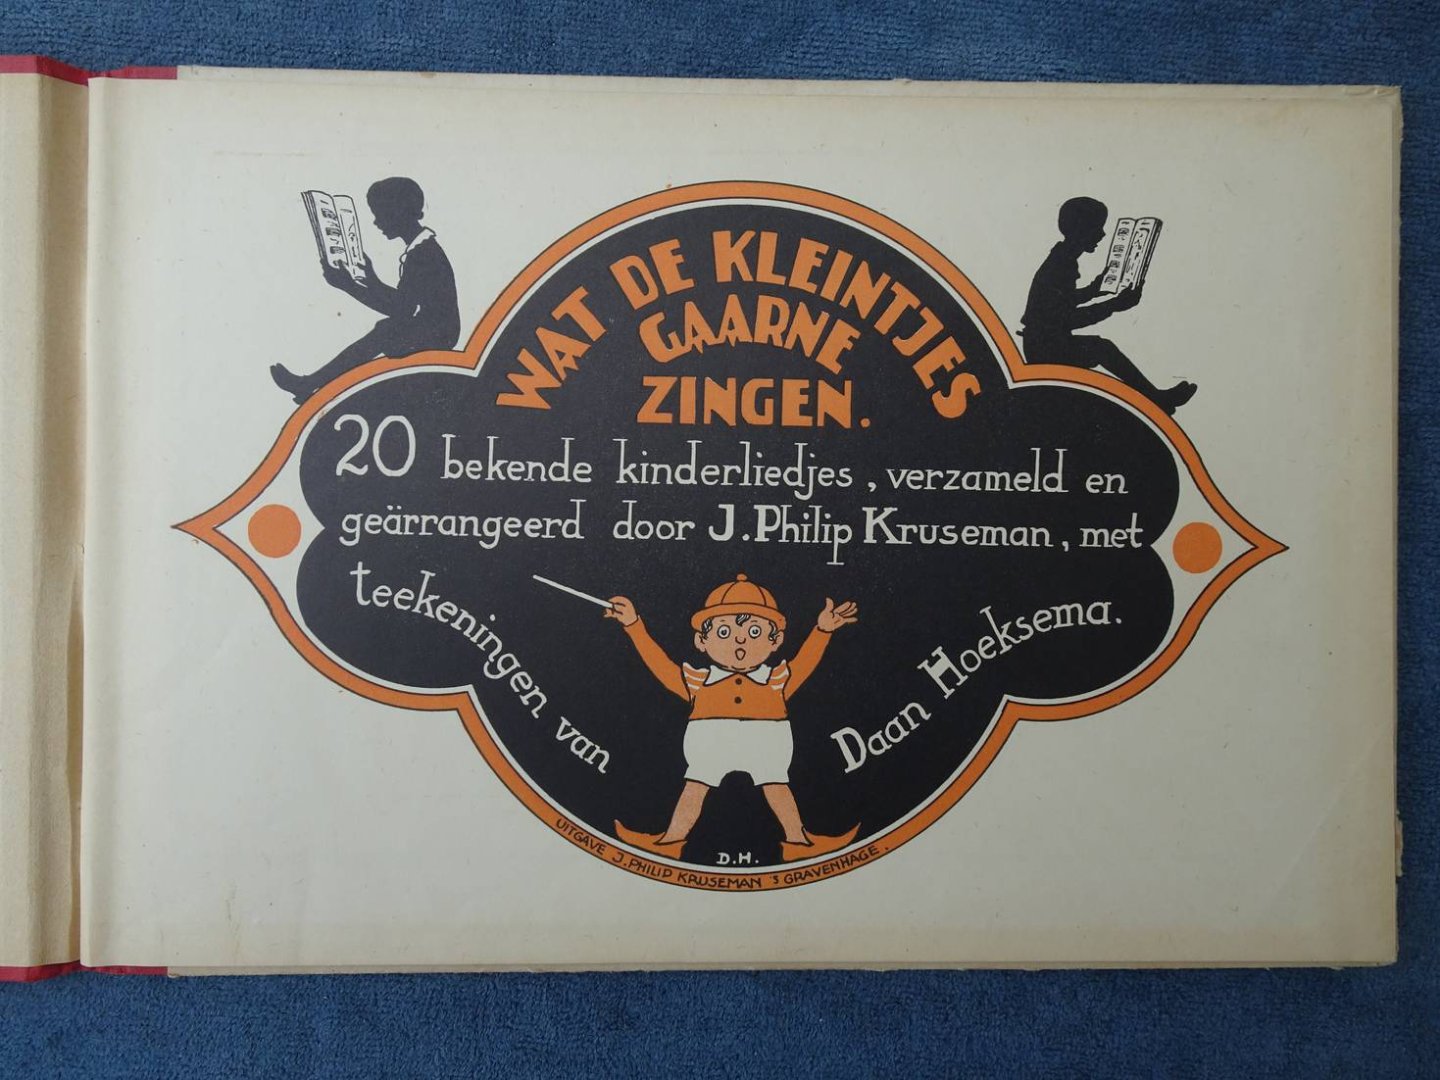 Kruseman, J. Philip - Wat de kleintjes gaarne zingen; 20 bekende kinderliedjes.